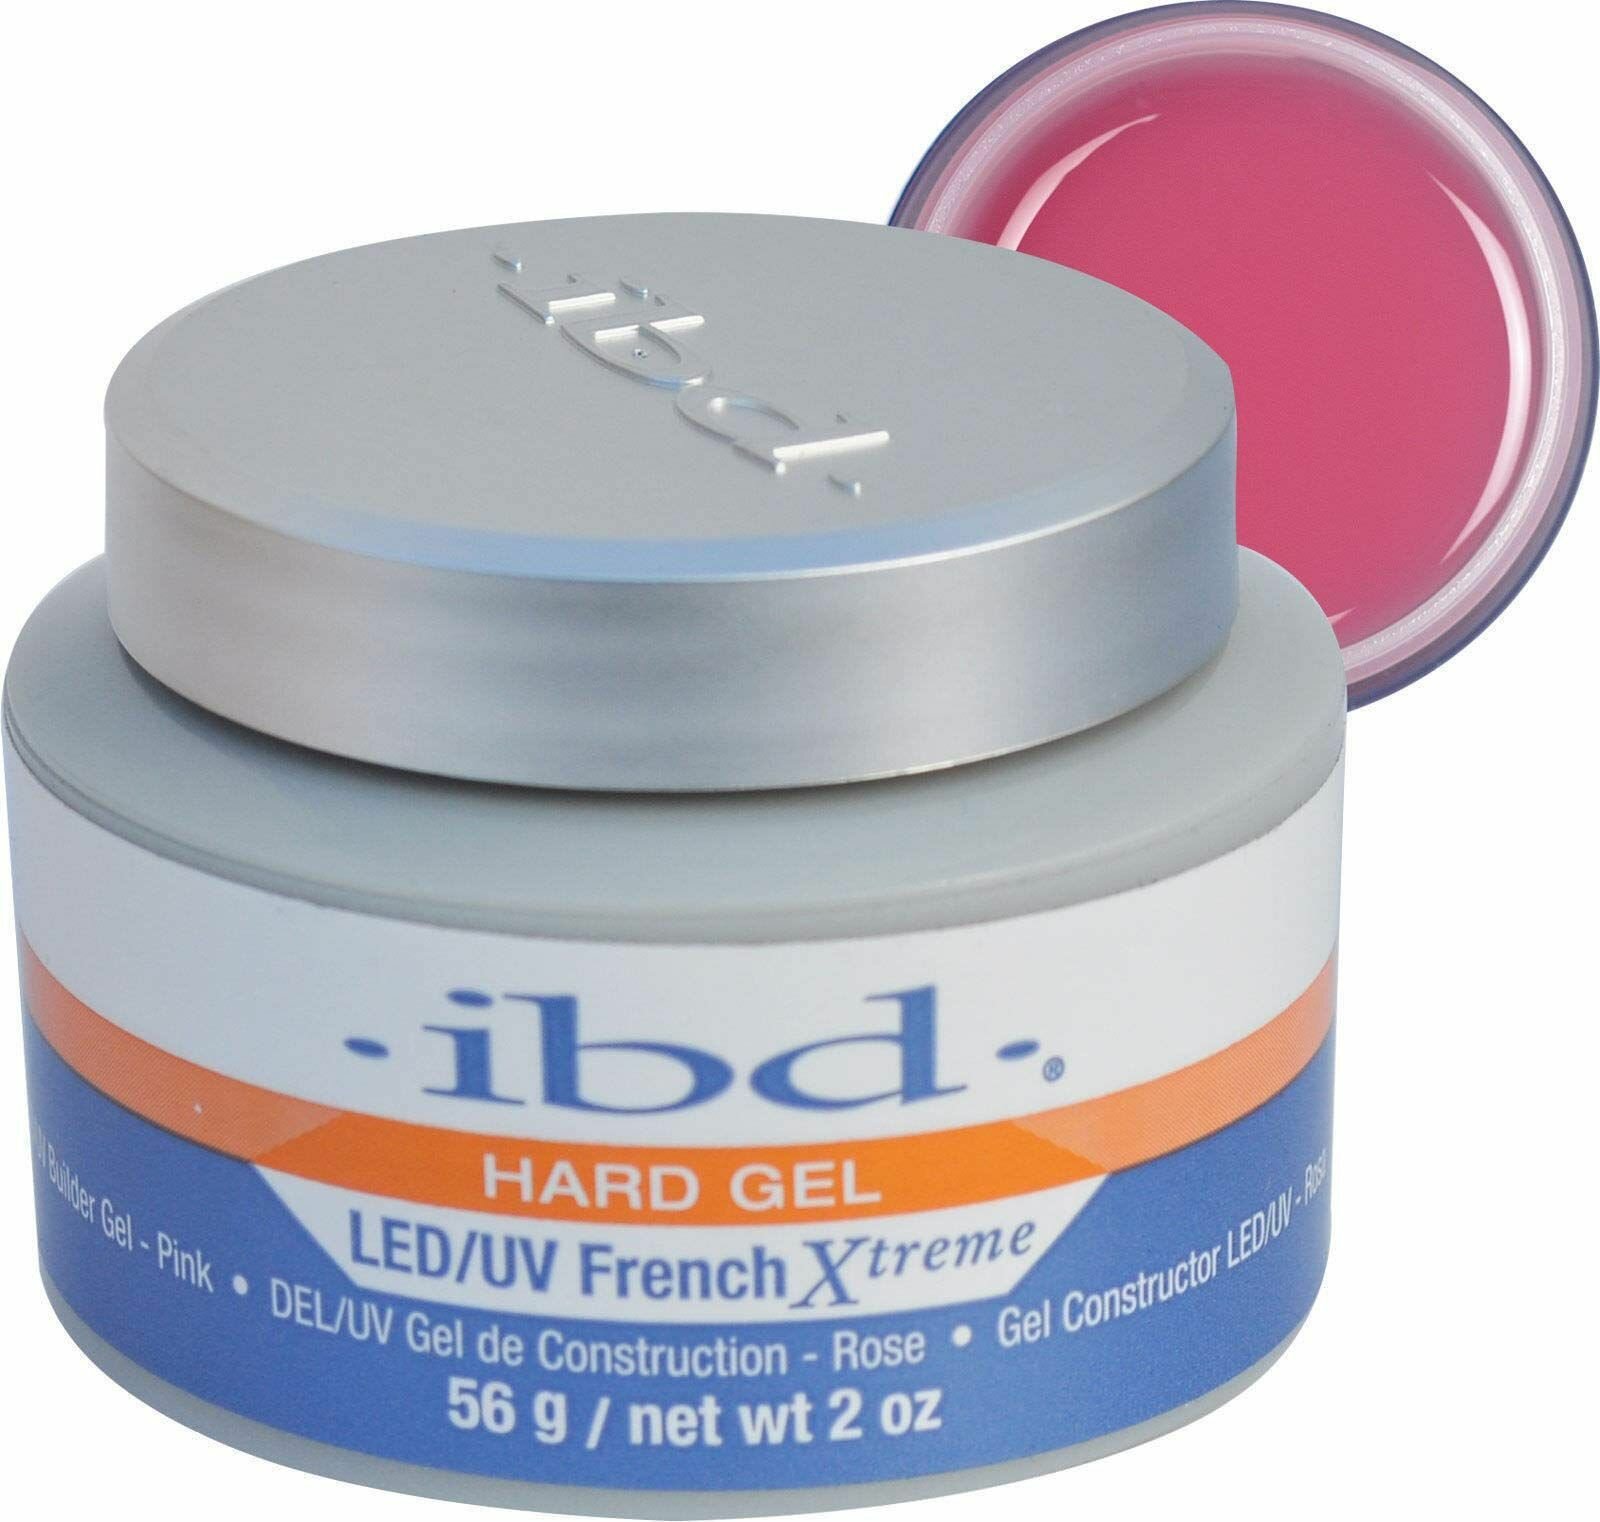 IBD, LED/UV, French X-treme Gel Pink, конструирующий ярко-розовый гель, 56гр